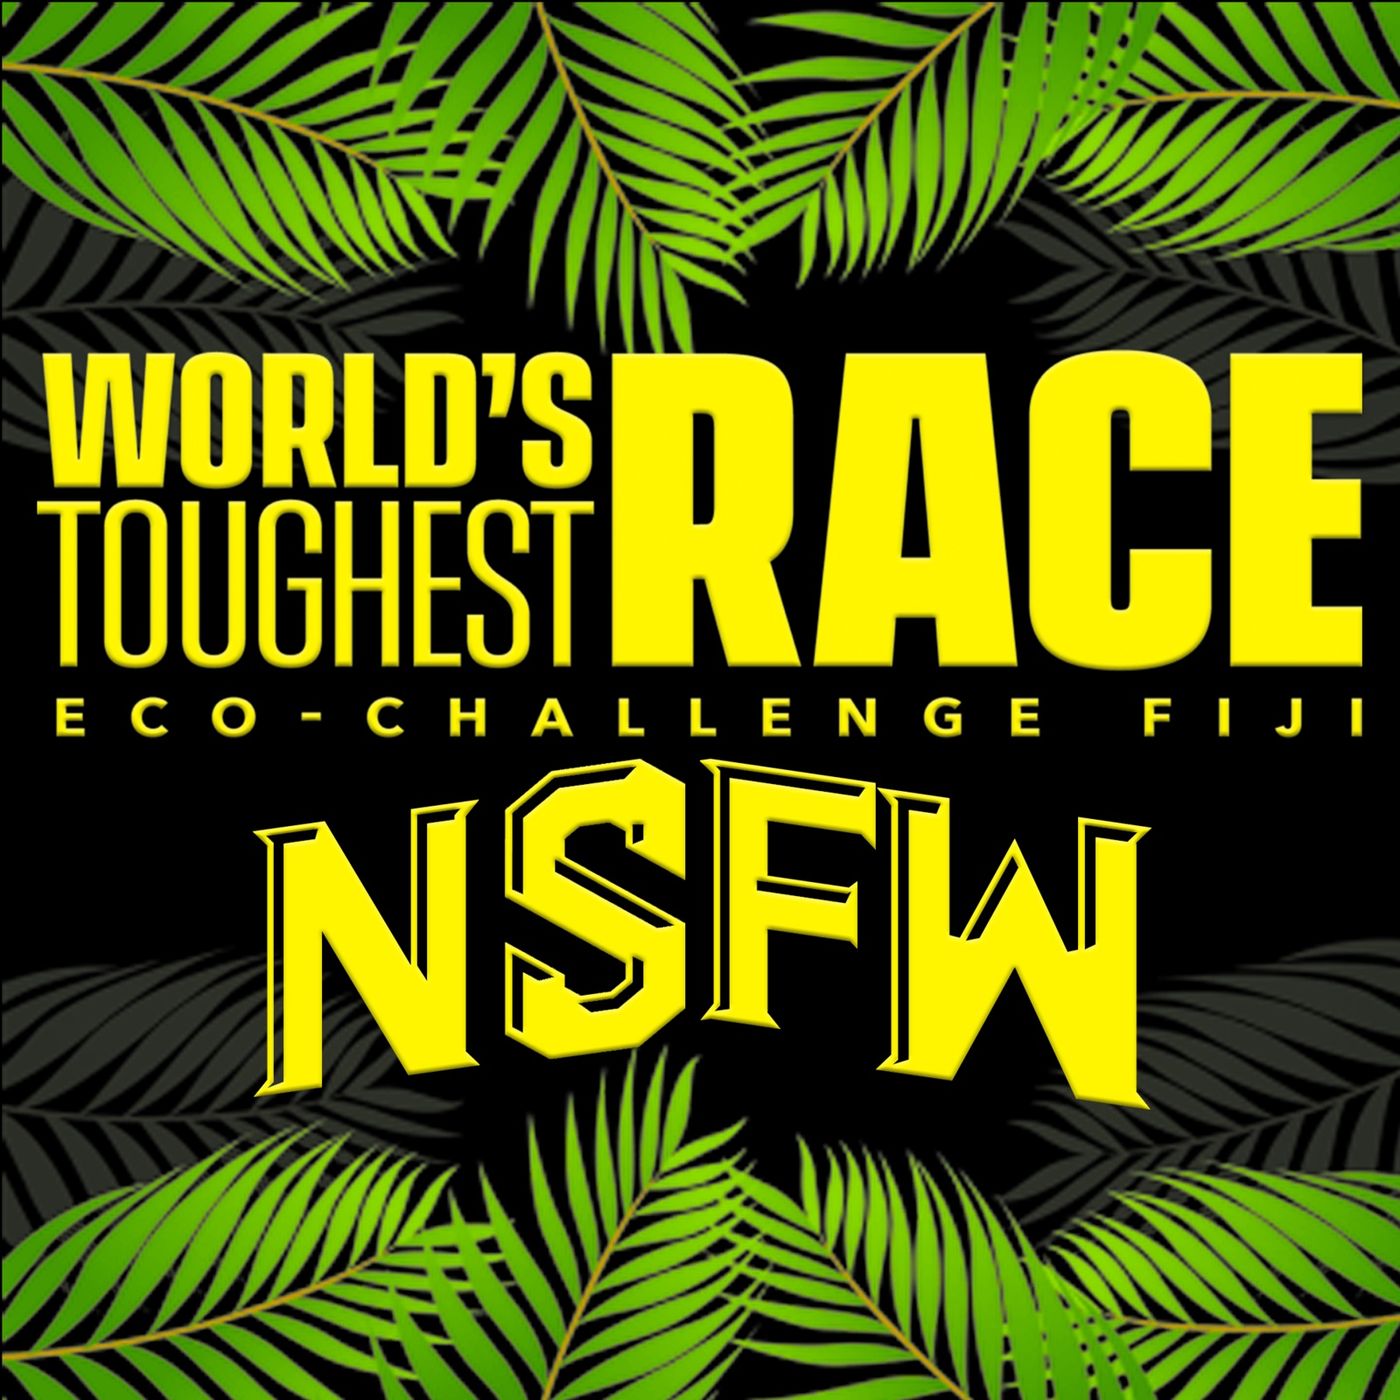 World's Toughest Race Eco Challenge Fiji with Travis Macy and Mark Macy of Team Endure